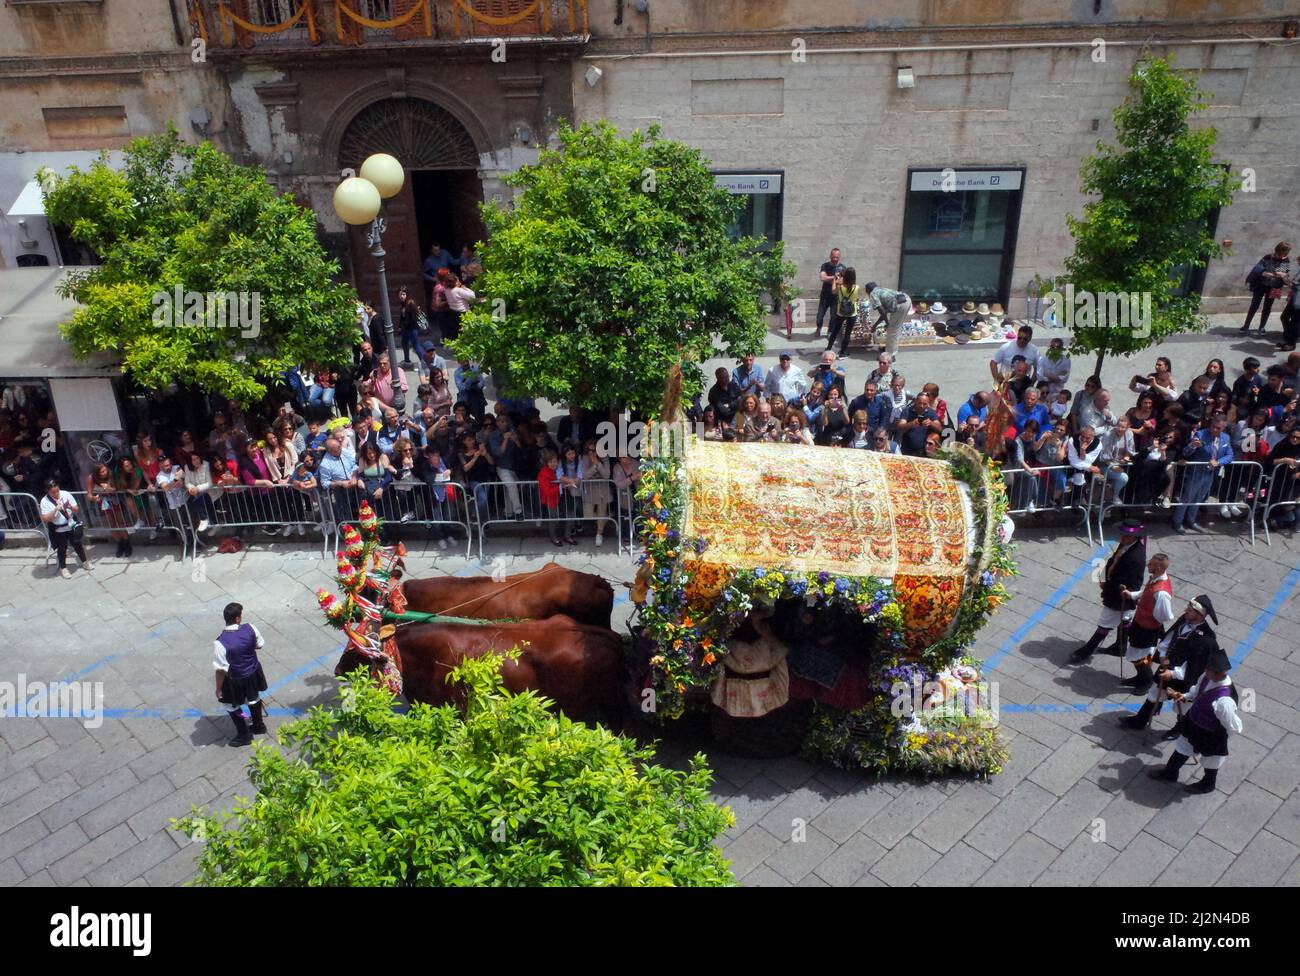 Sassari, Sardinia, Italy. Cavalcata Sarda, traditional parade of costumes and riders from all over Sardinia Stock Photo